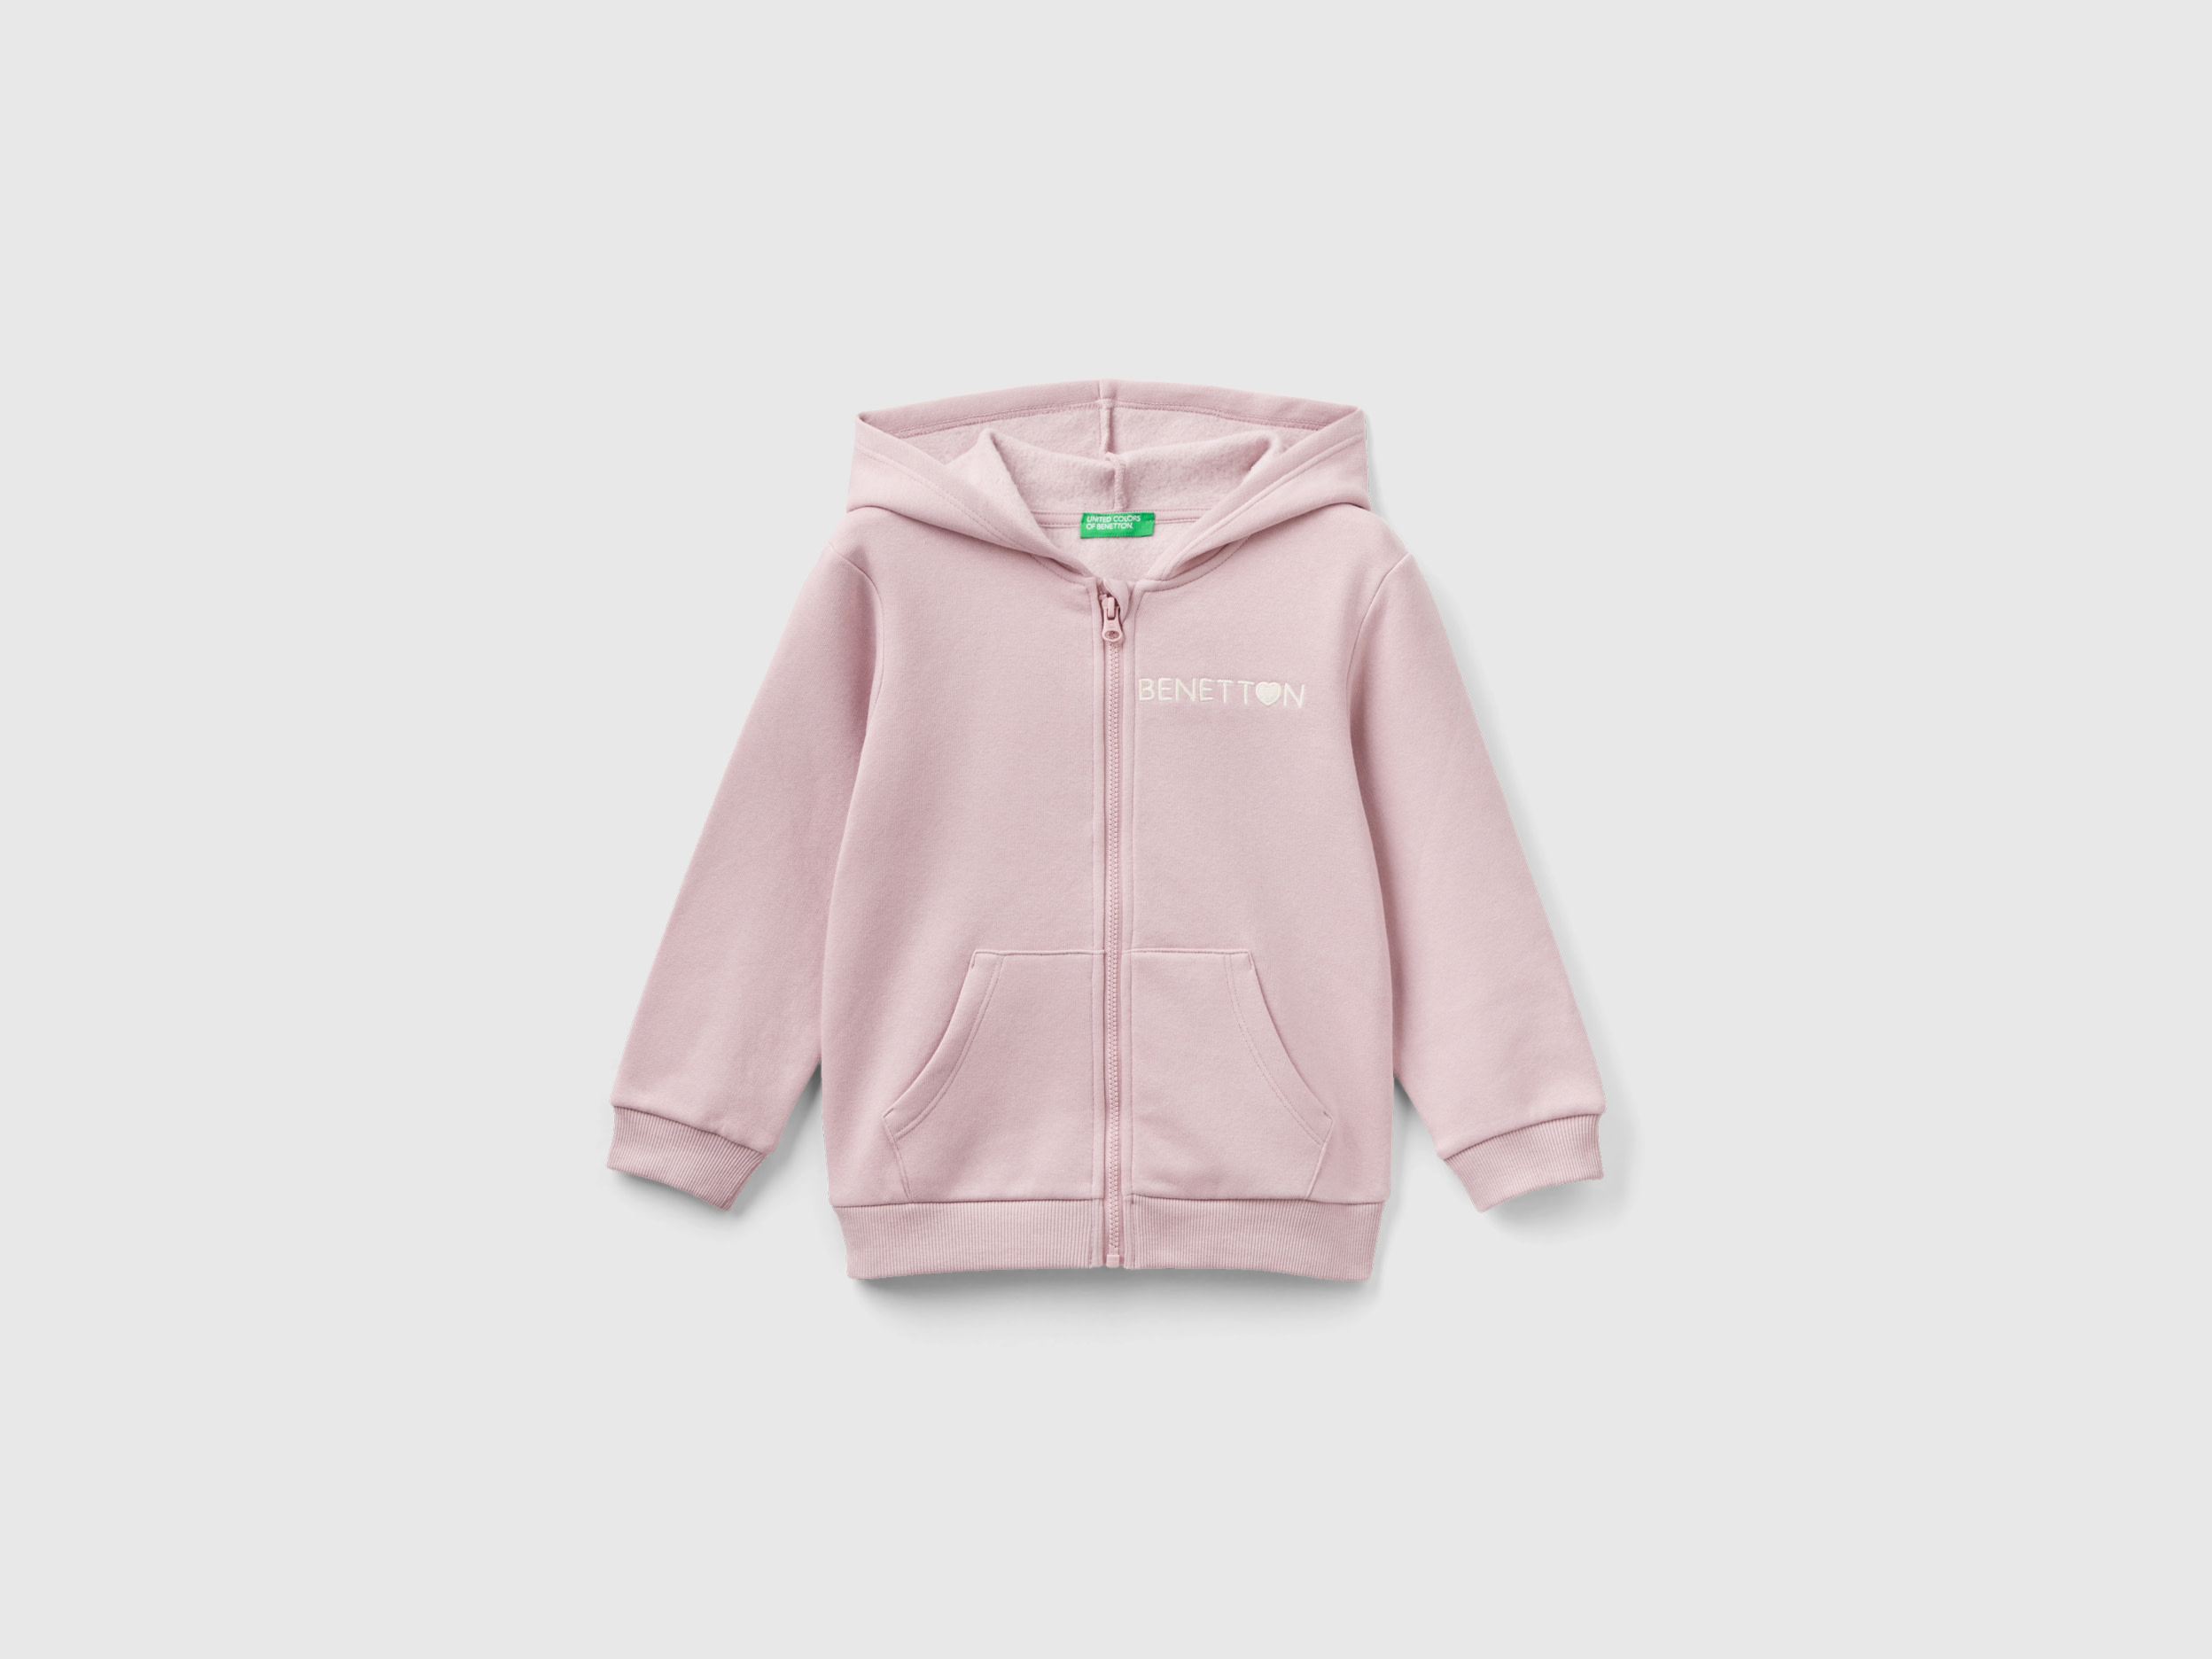 Benetton, Zip-up Sweatshirt In Cotton Blend, size 4-5, Pink, Kids